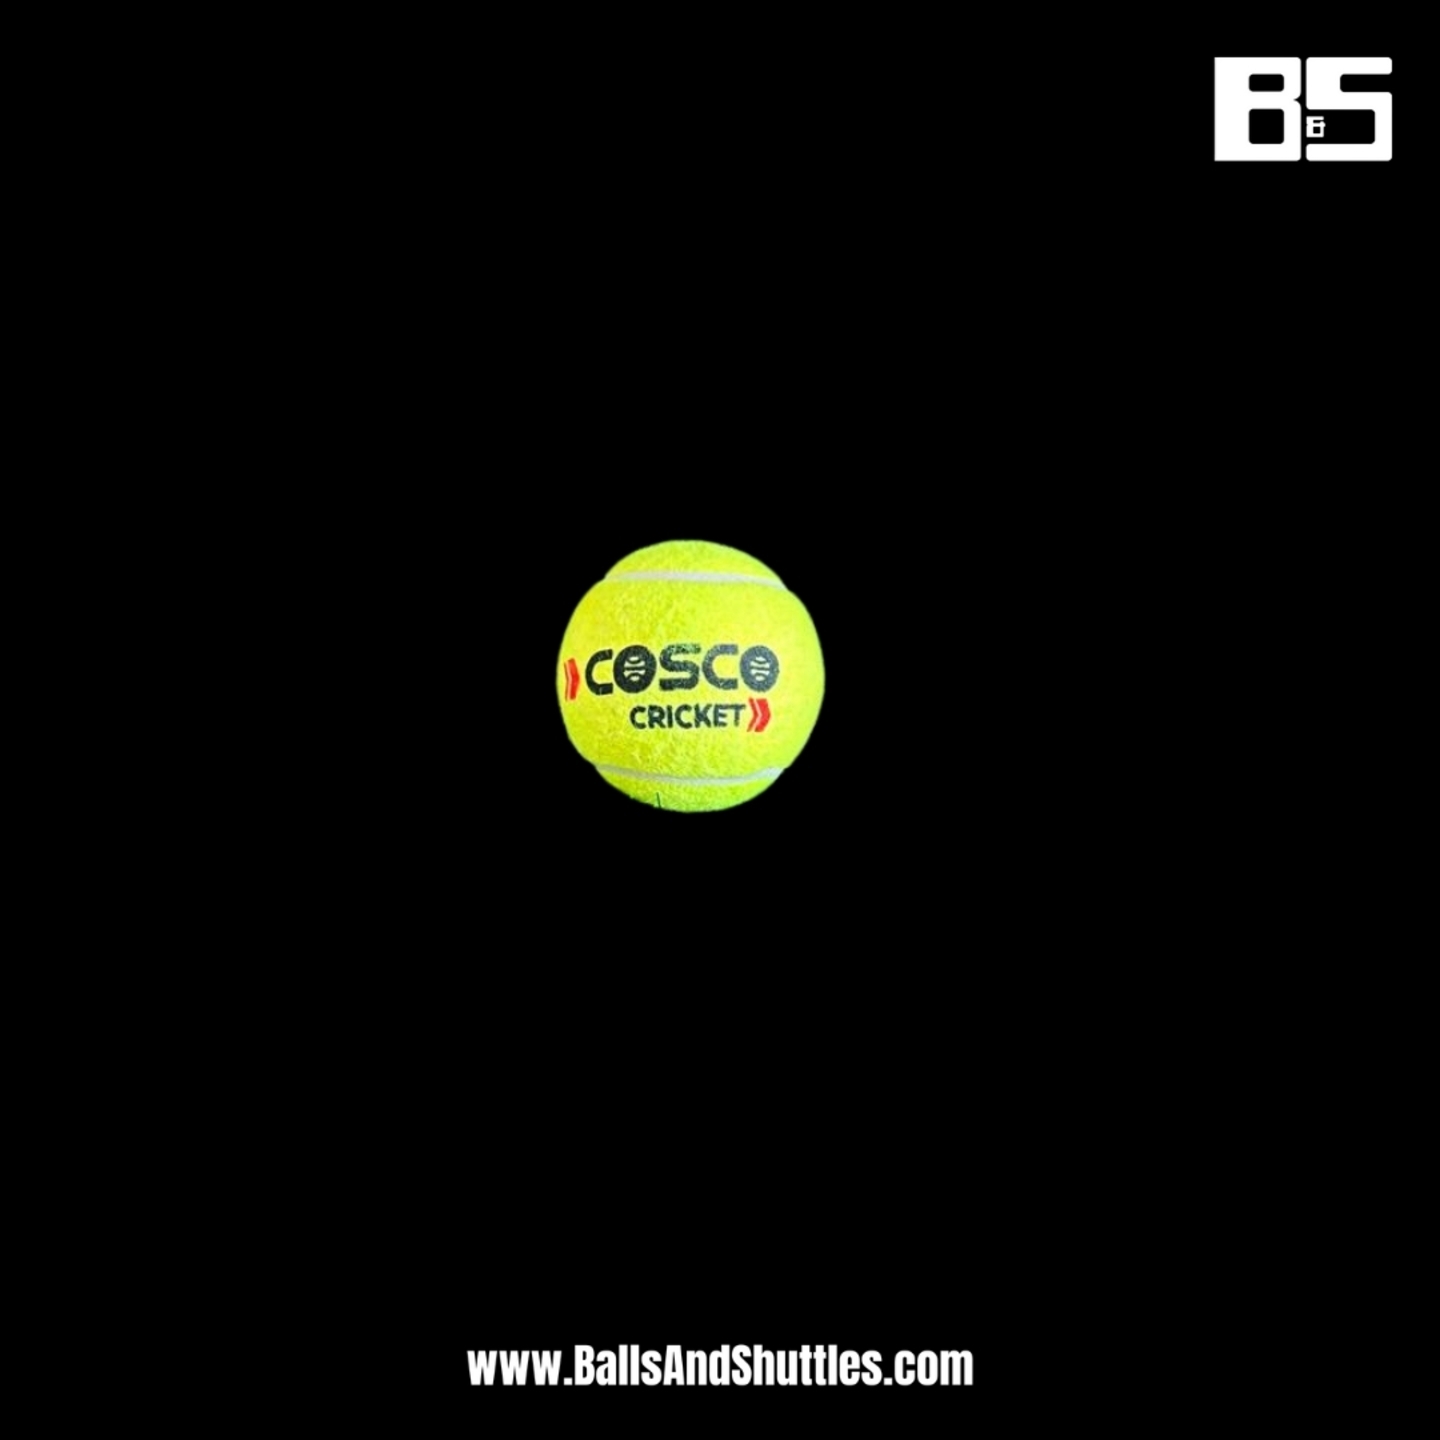 COSCO CRICKET TENNIS BALL  COSCO LIGHT WEIGHT TENNIS CRICKET BALL  COSCO CRICKET BALL